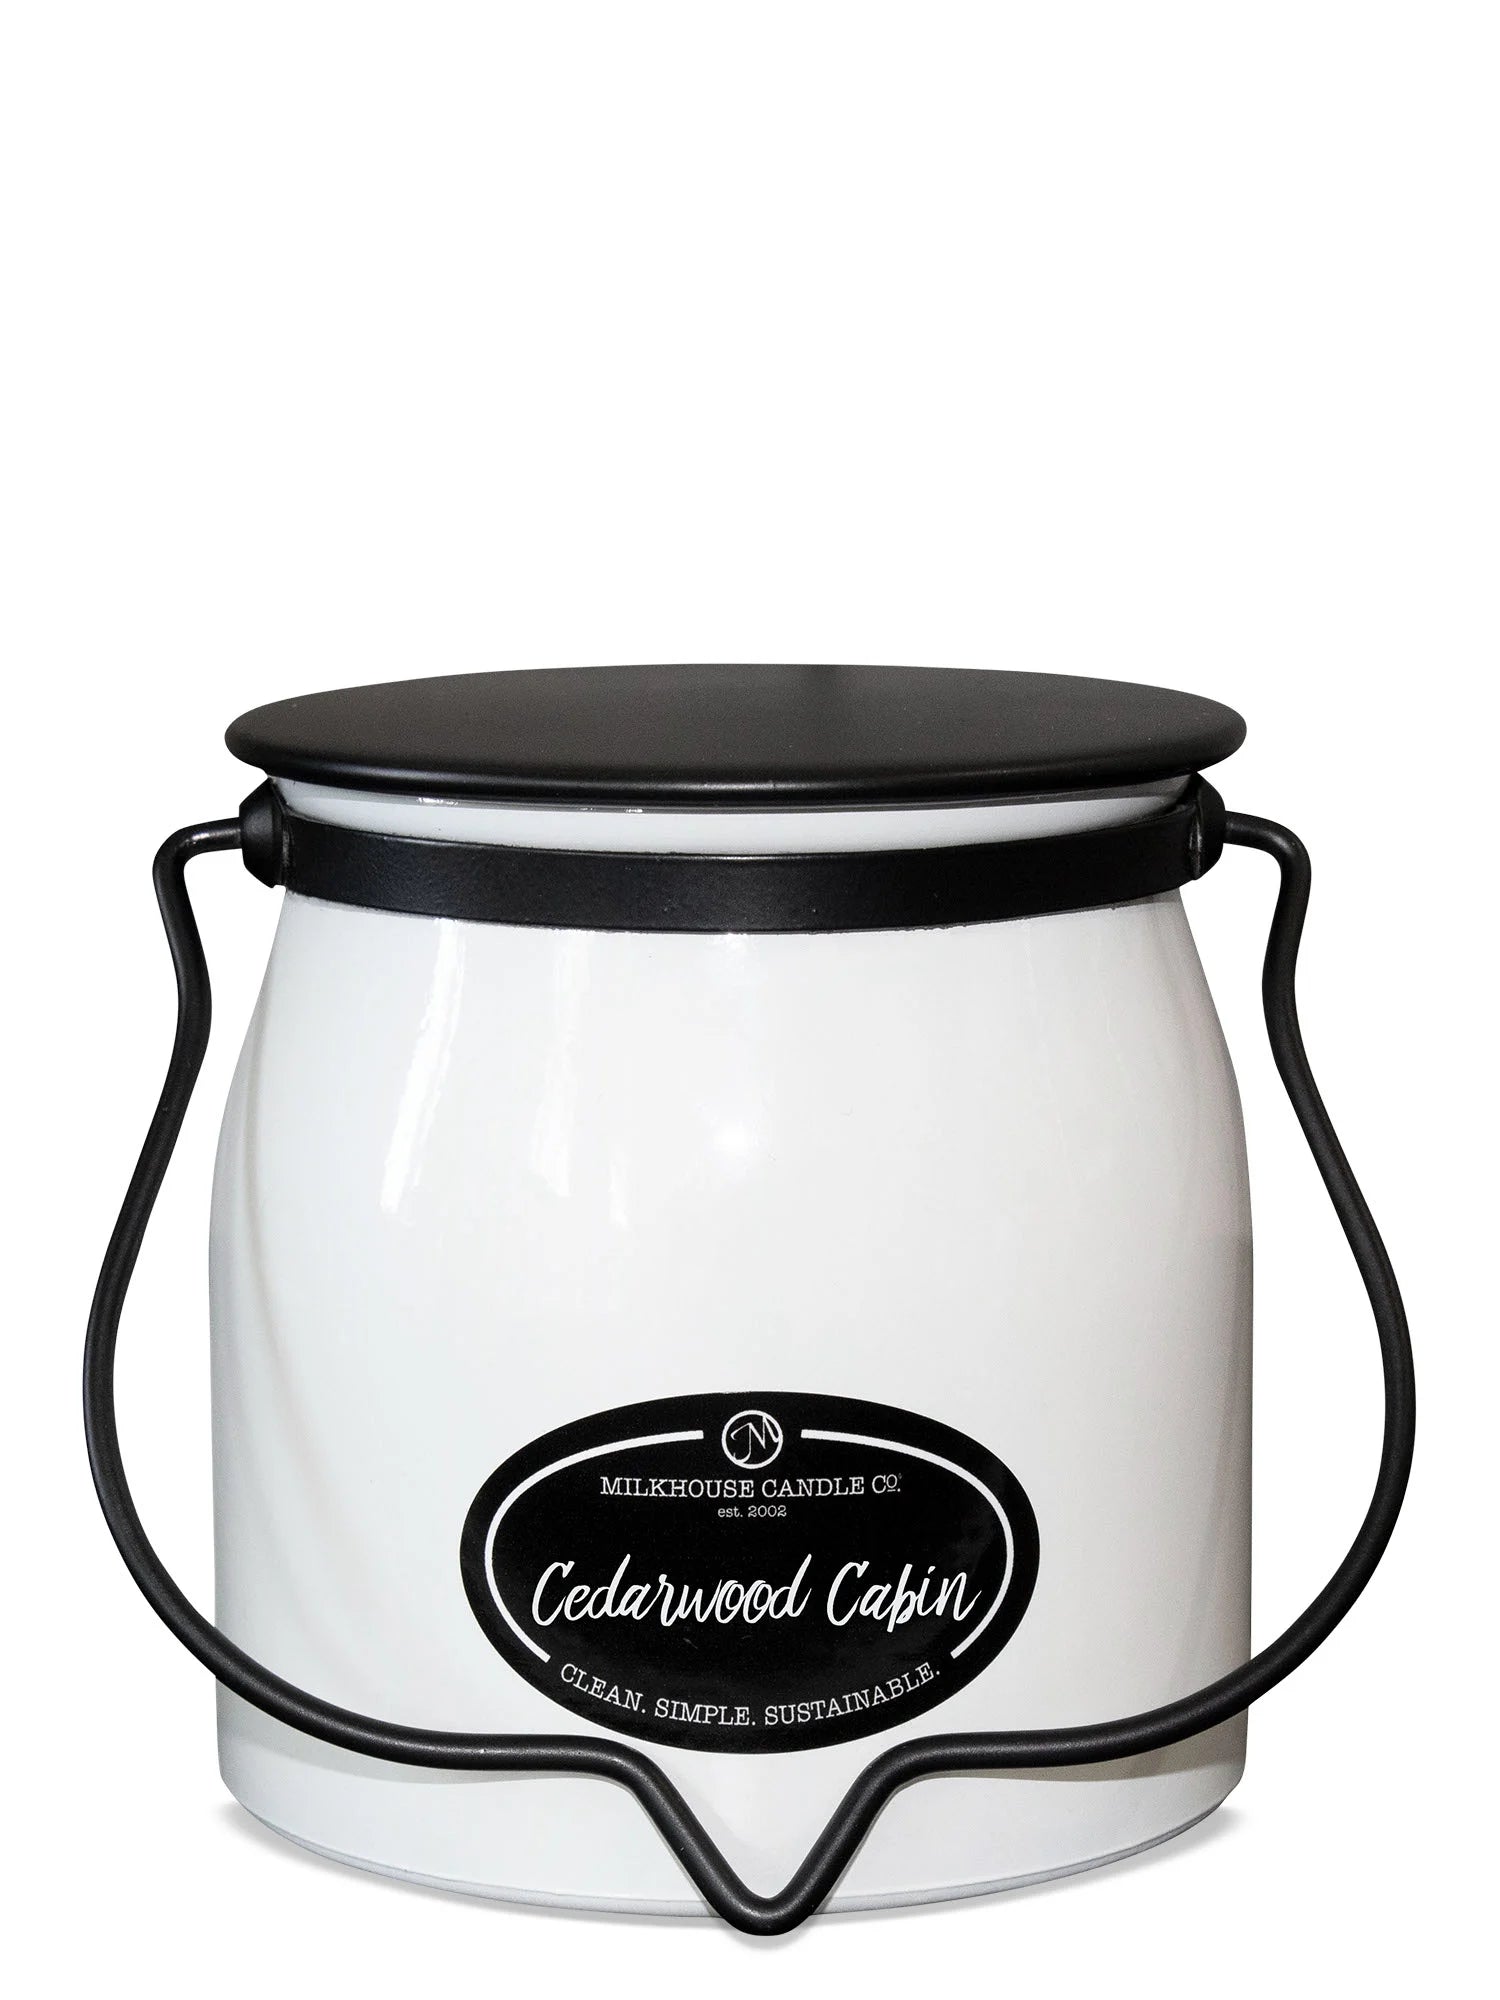 Cedarwood Cabin Milkhouse Candle 16 oz.